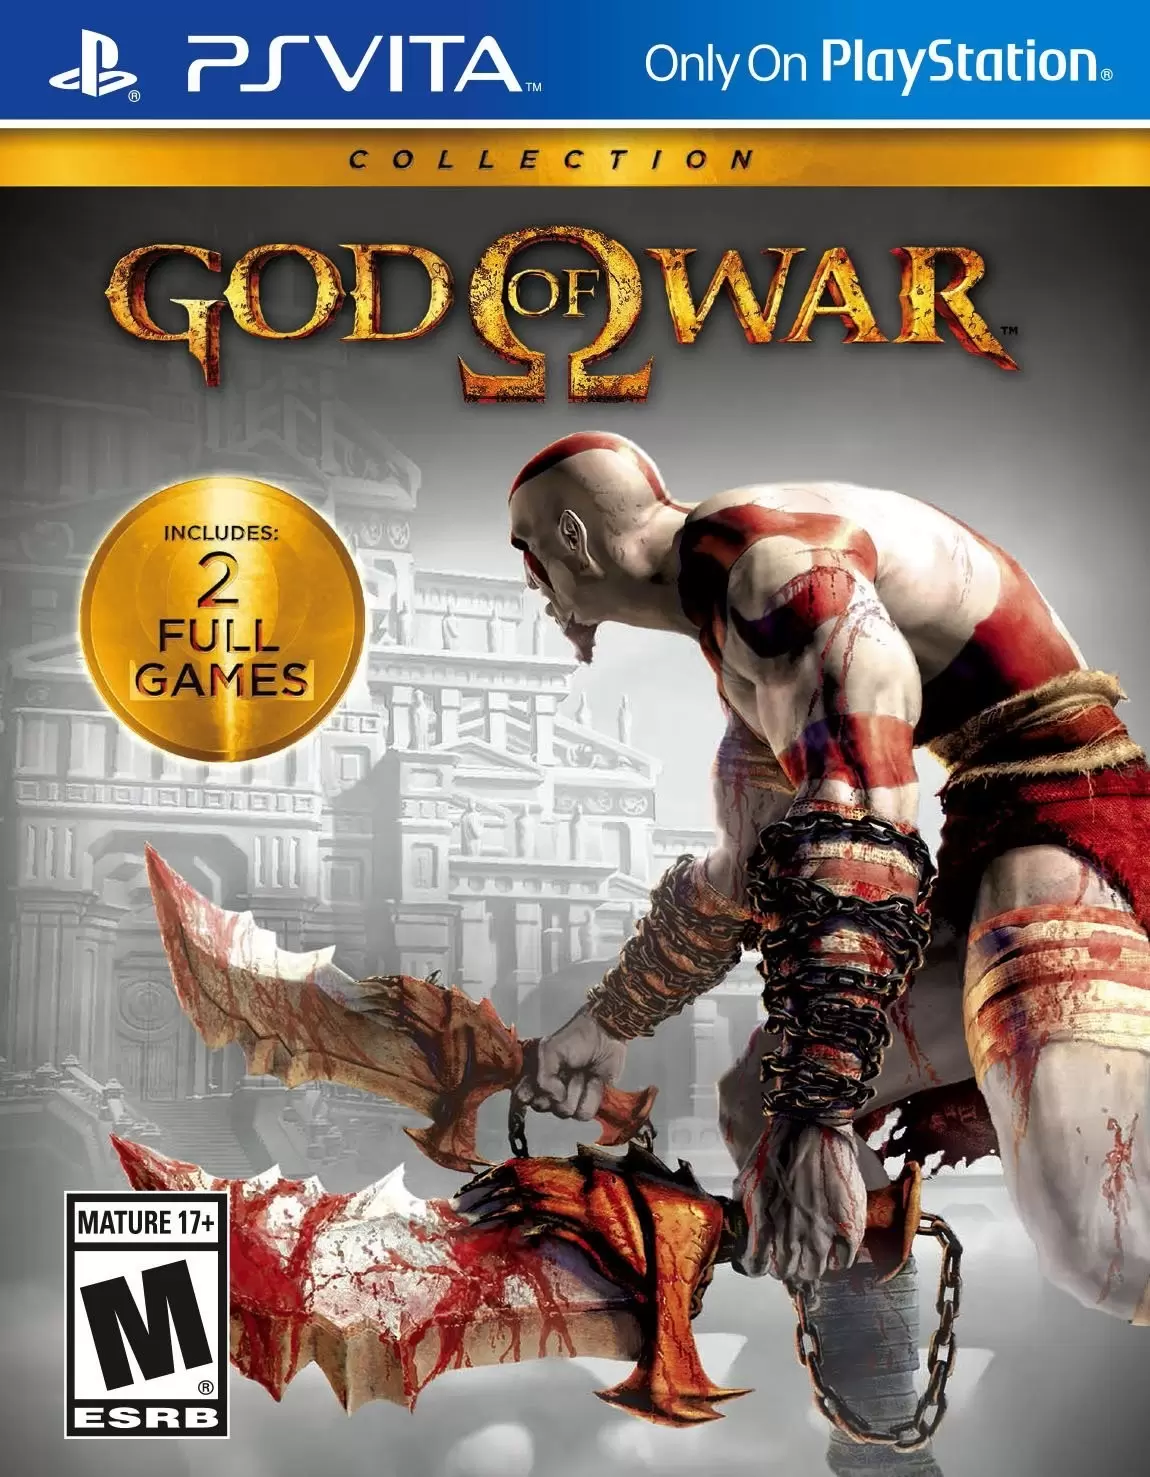 PS Vita Games - God of War Collection